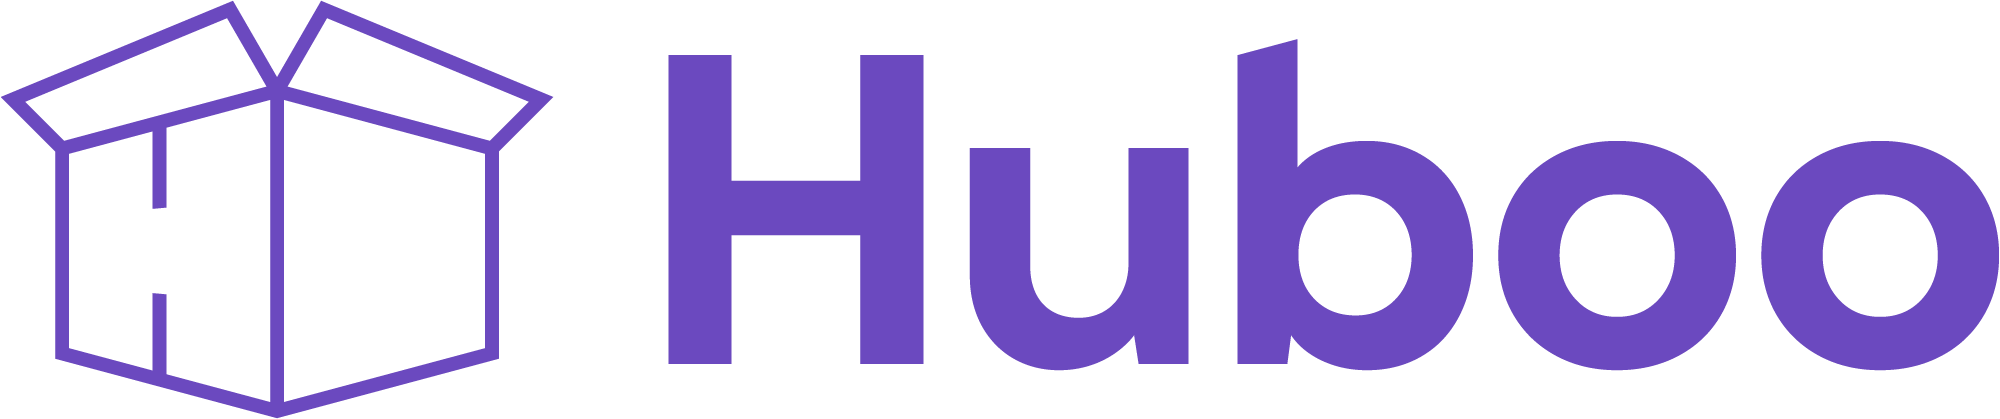 Huboo's logo